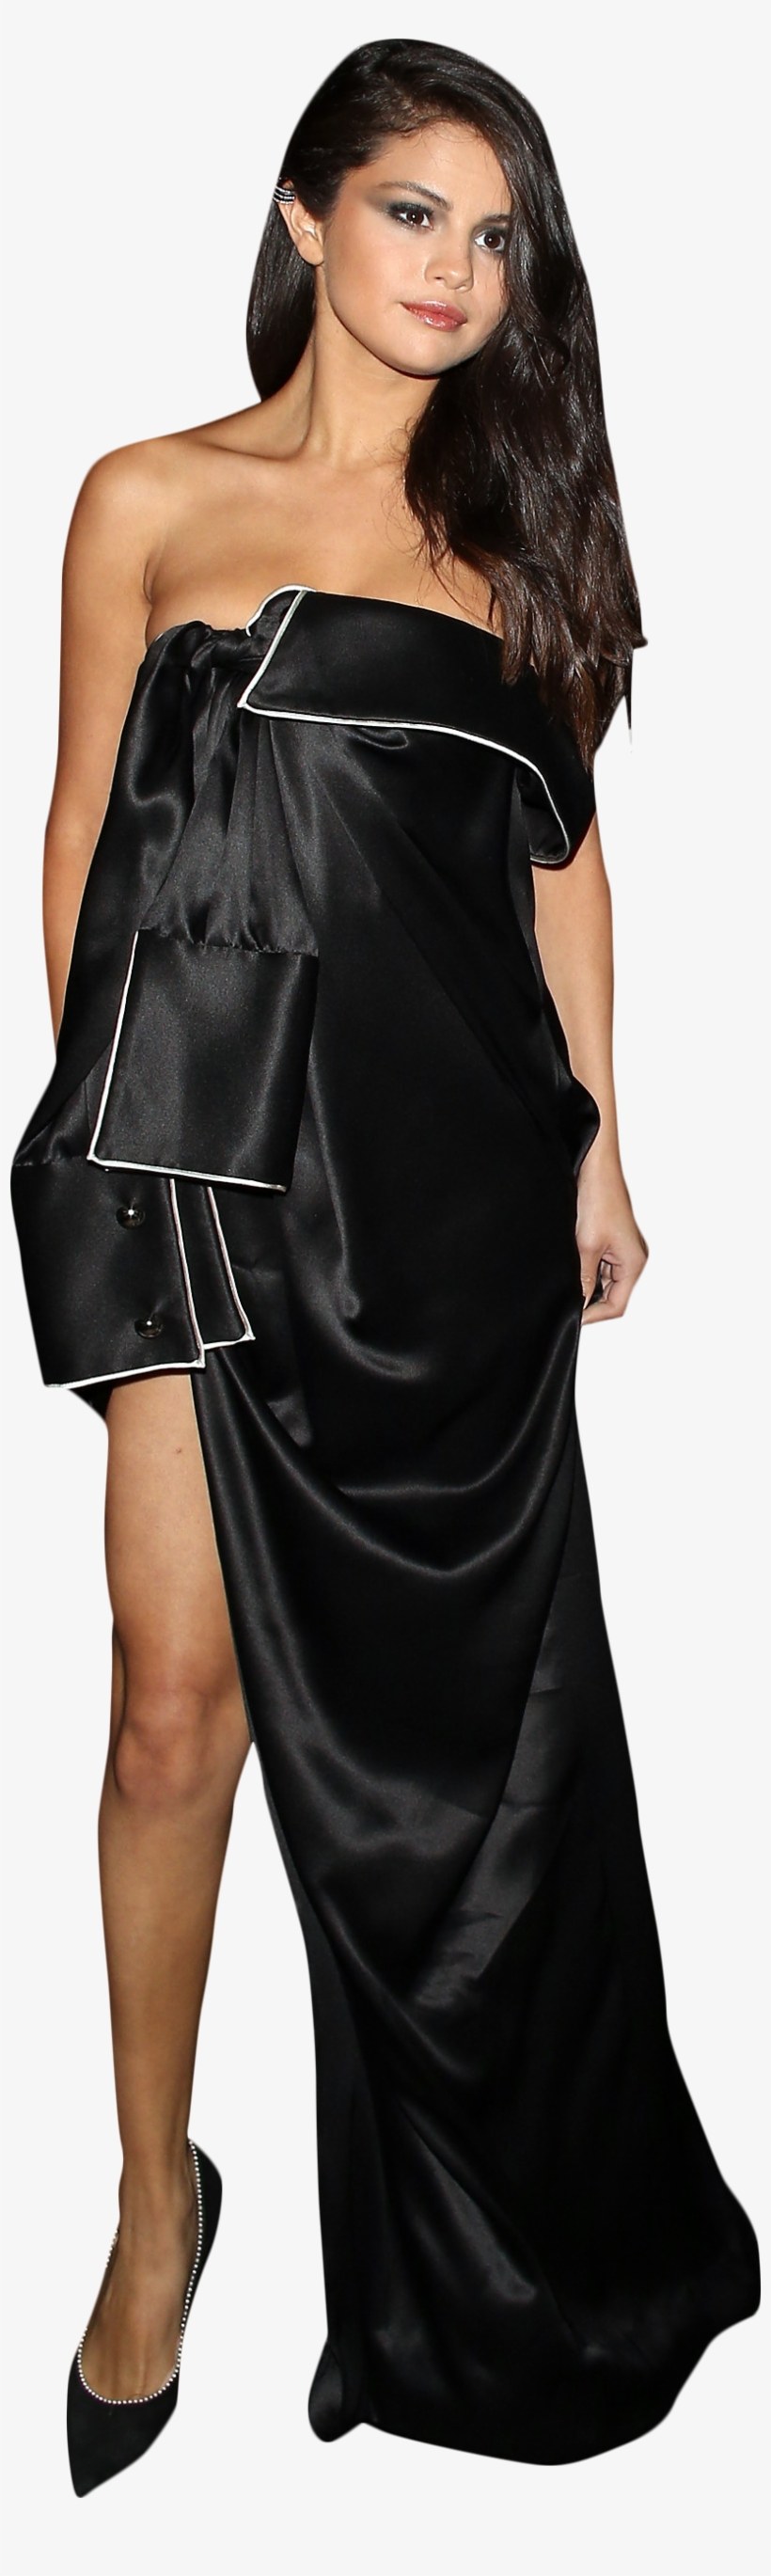 Selena Gomez Black Dress Png Image - Dress, transparent png #3915003